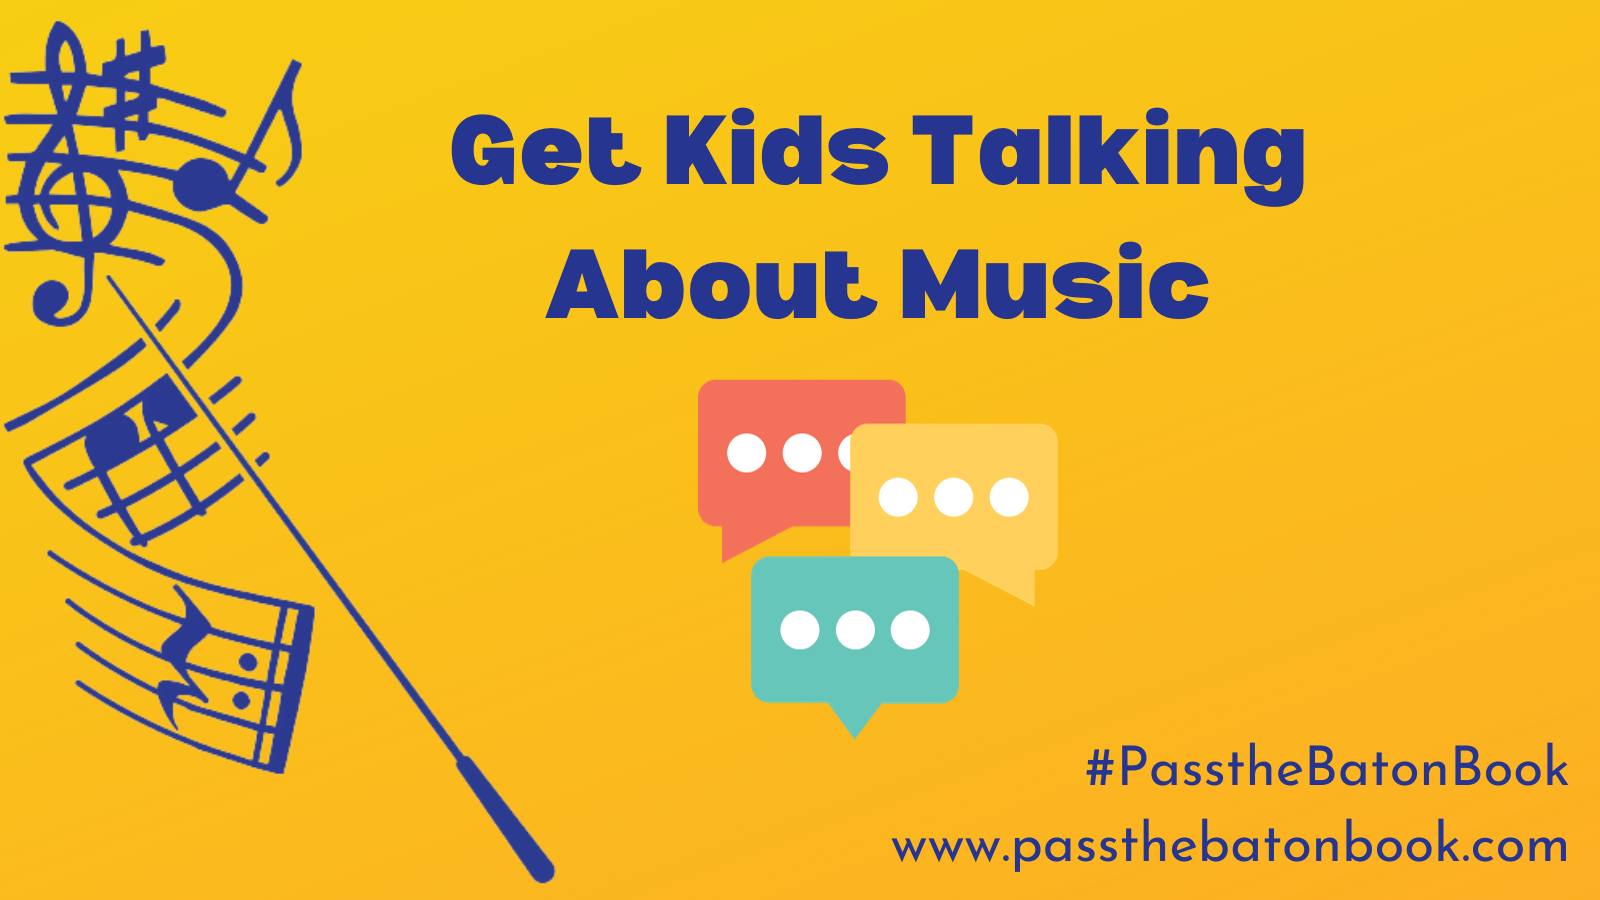 Get kids talking about music 